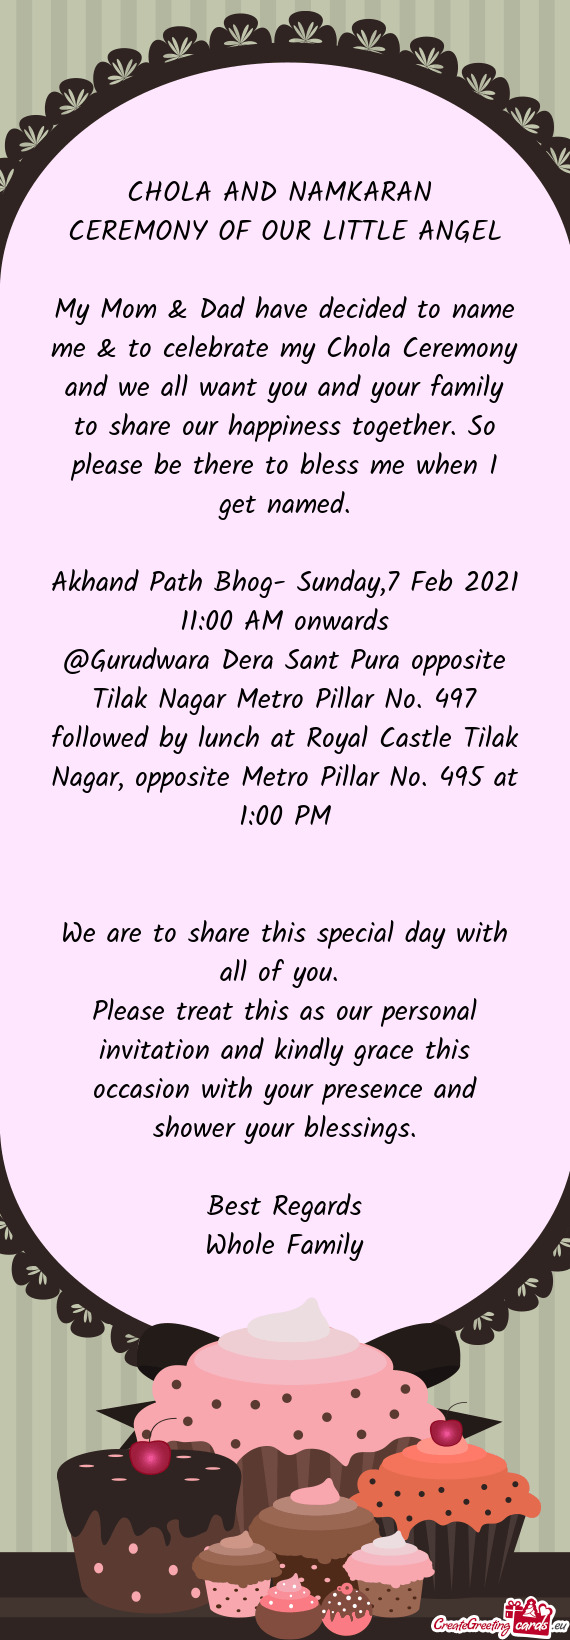 497 followed by lunch at Royal Castle Tilak Nagar